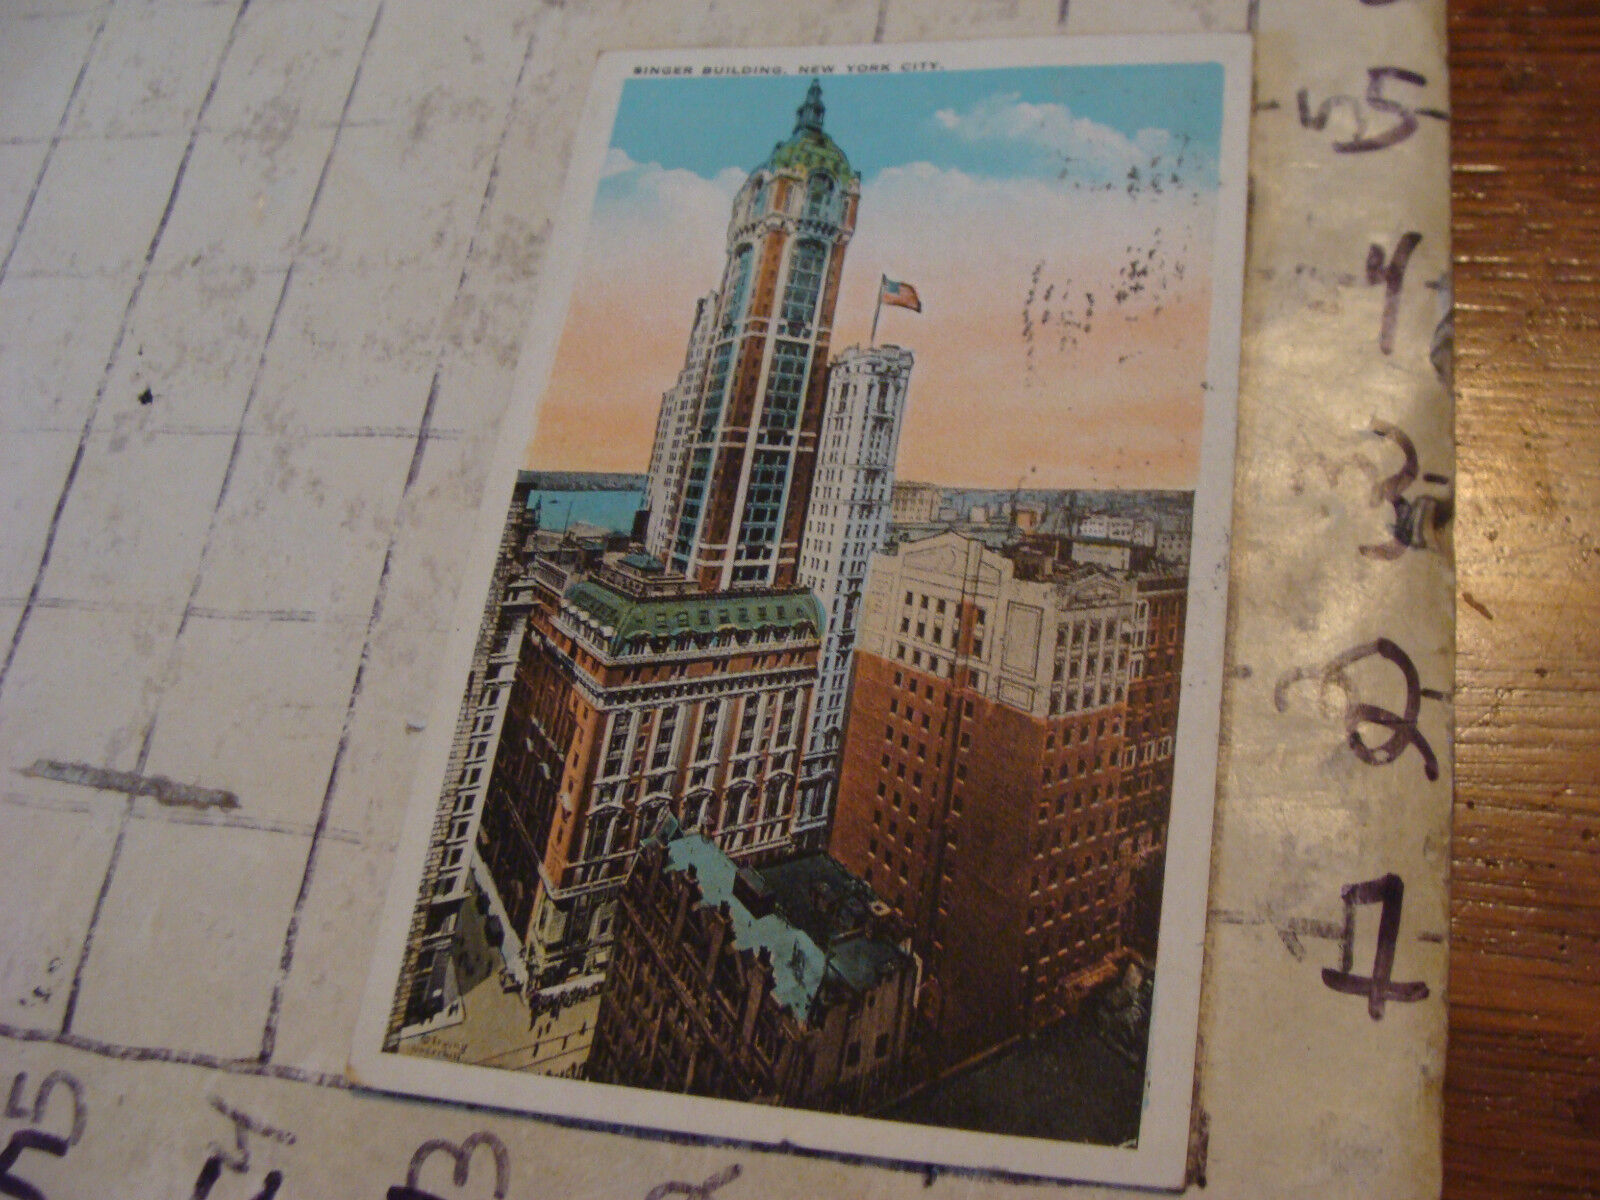 Orig Vint post card SINGER BUILDING, new york CITY 1930